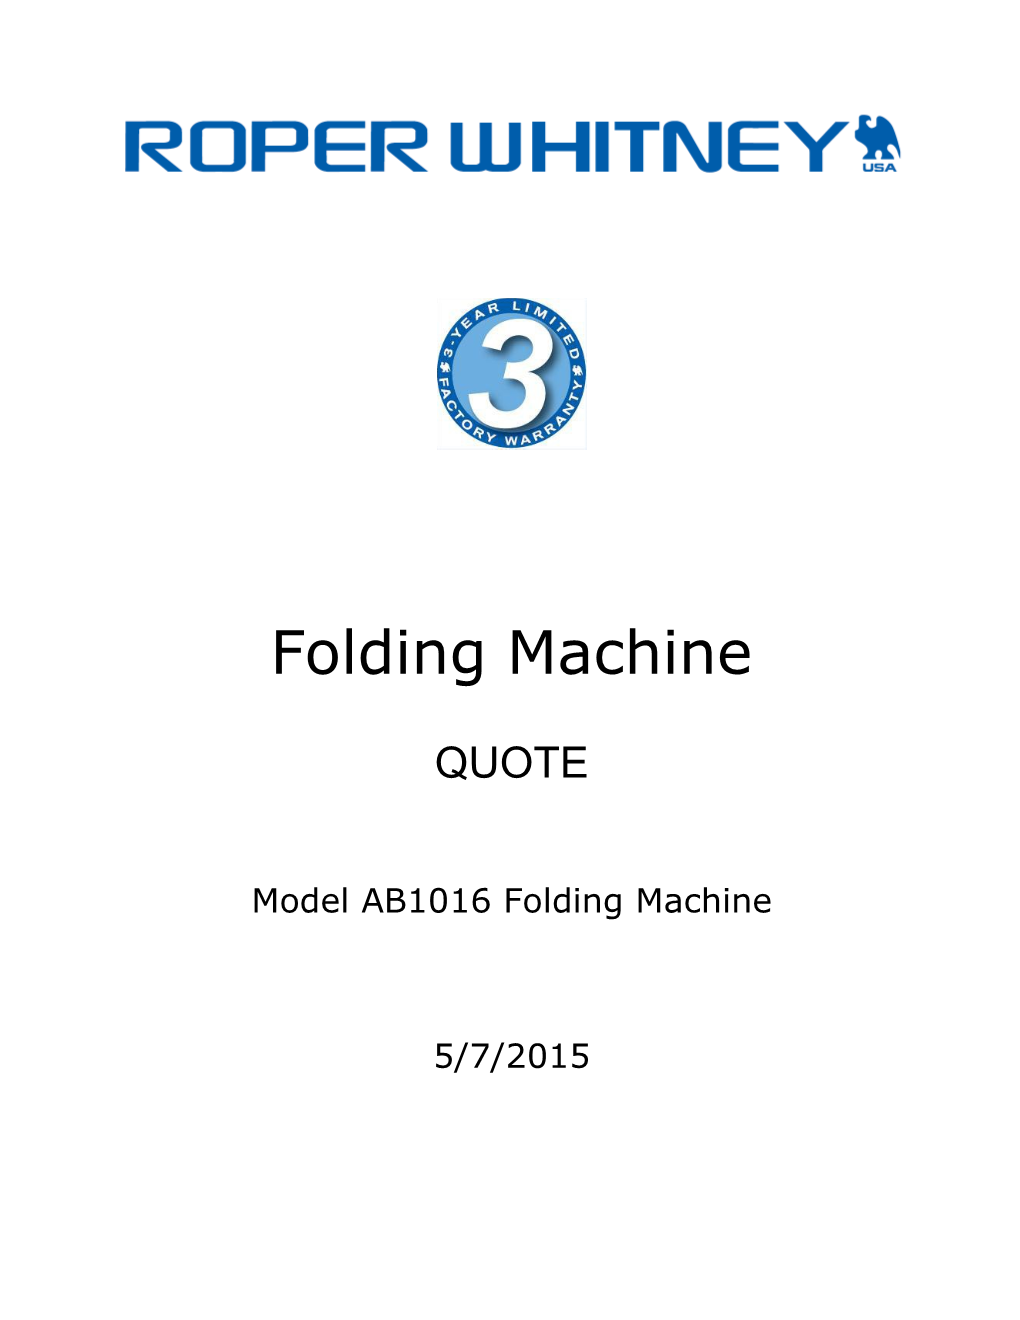 Modelab1016 Folding Machine